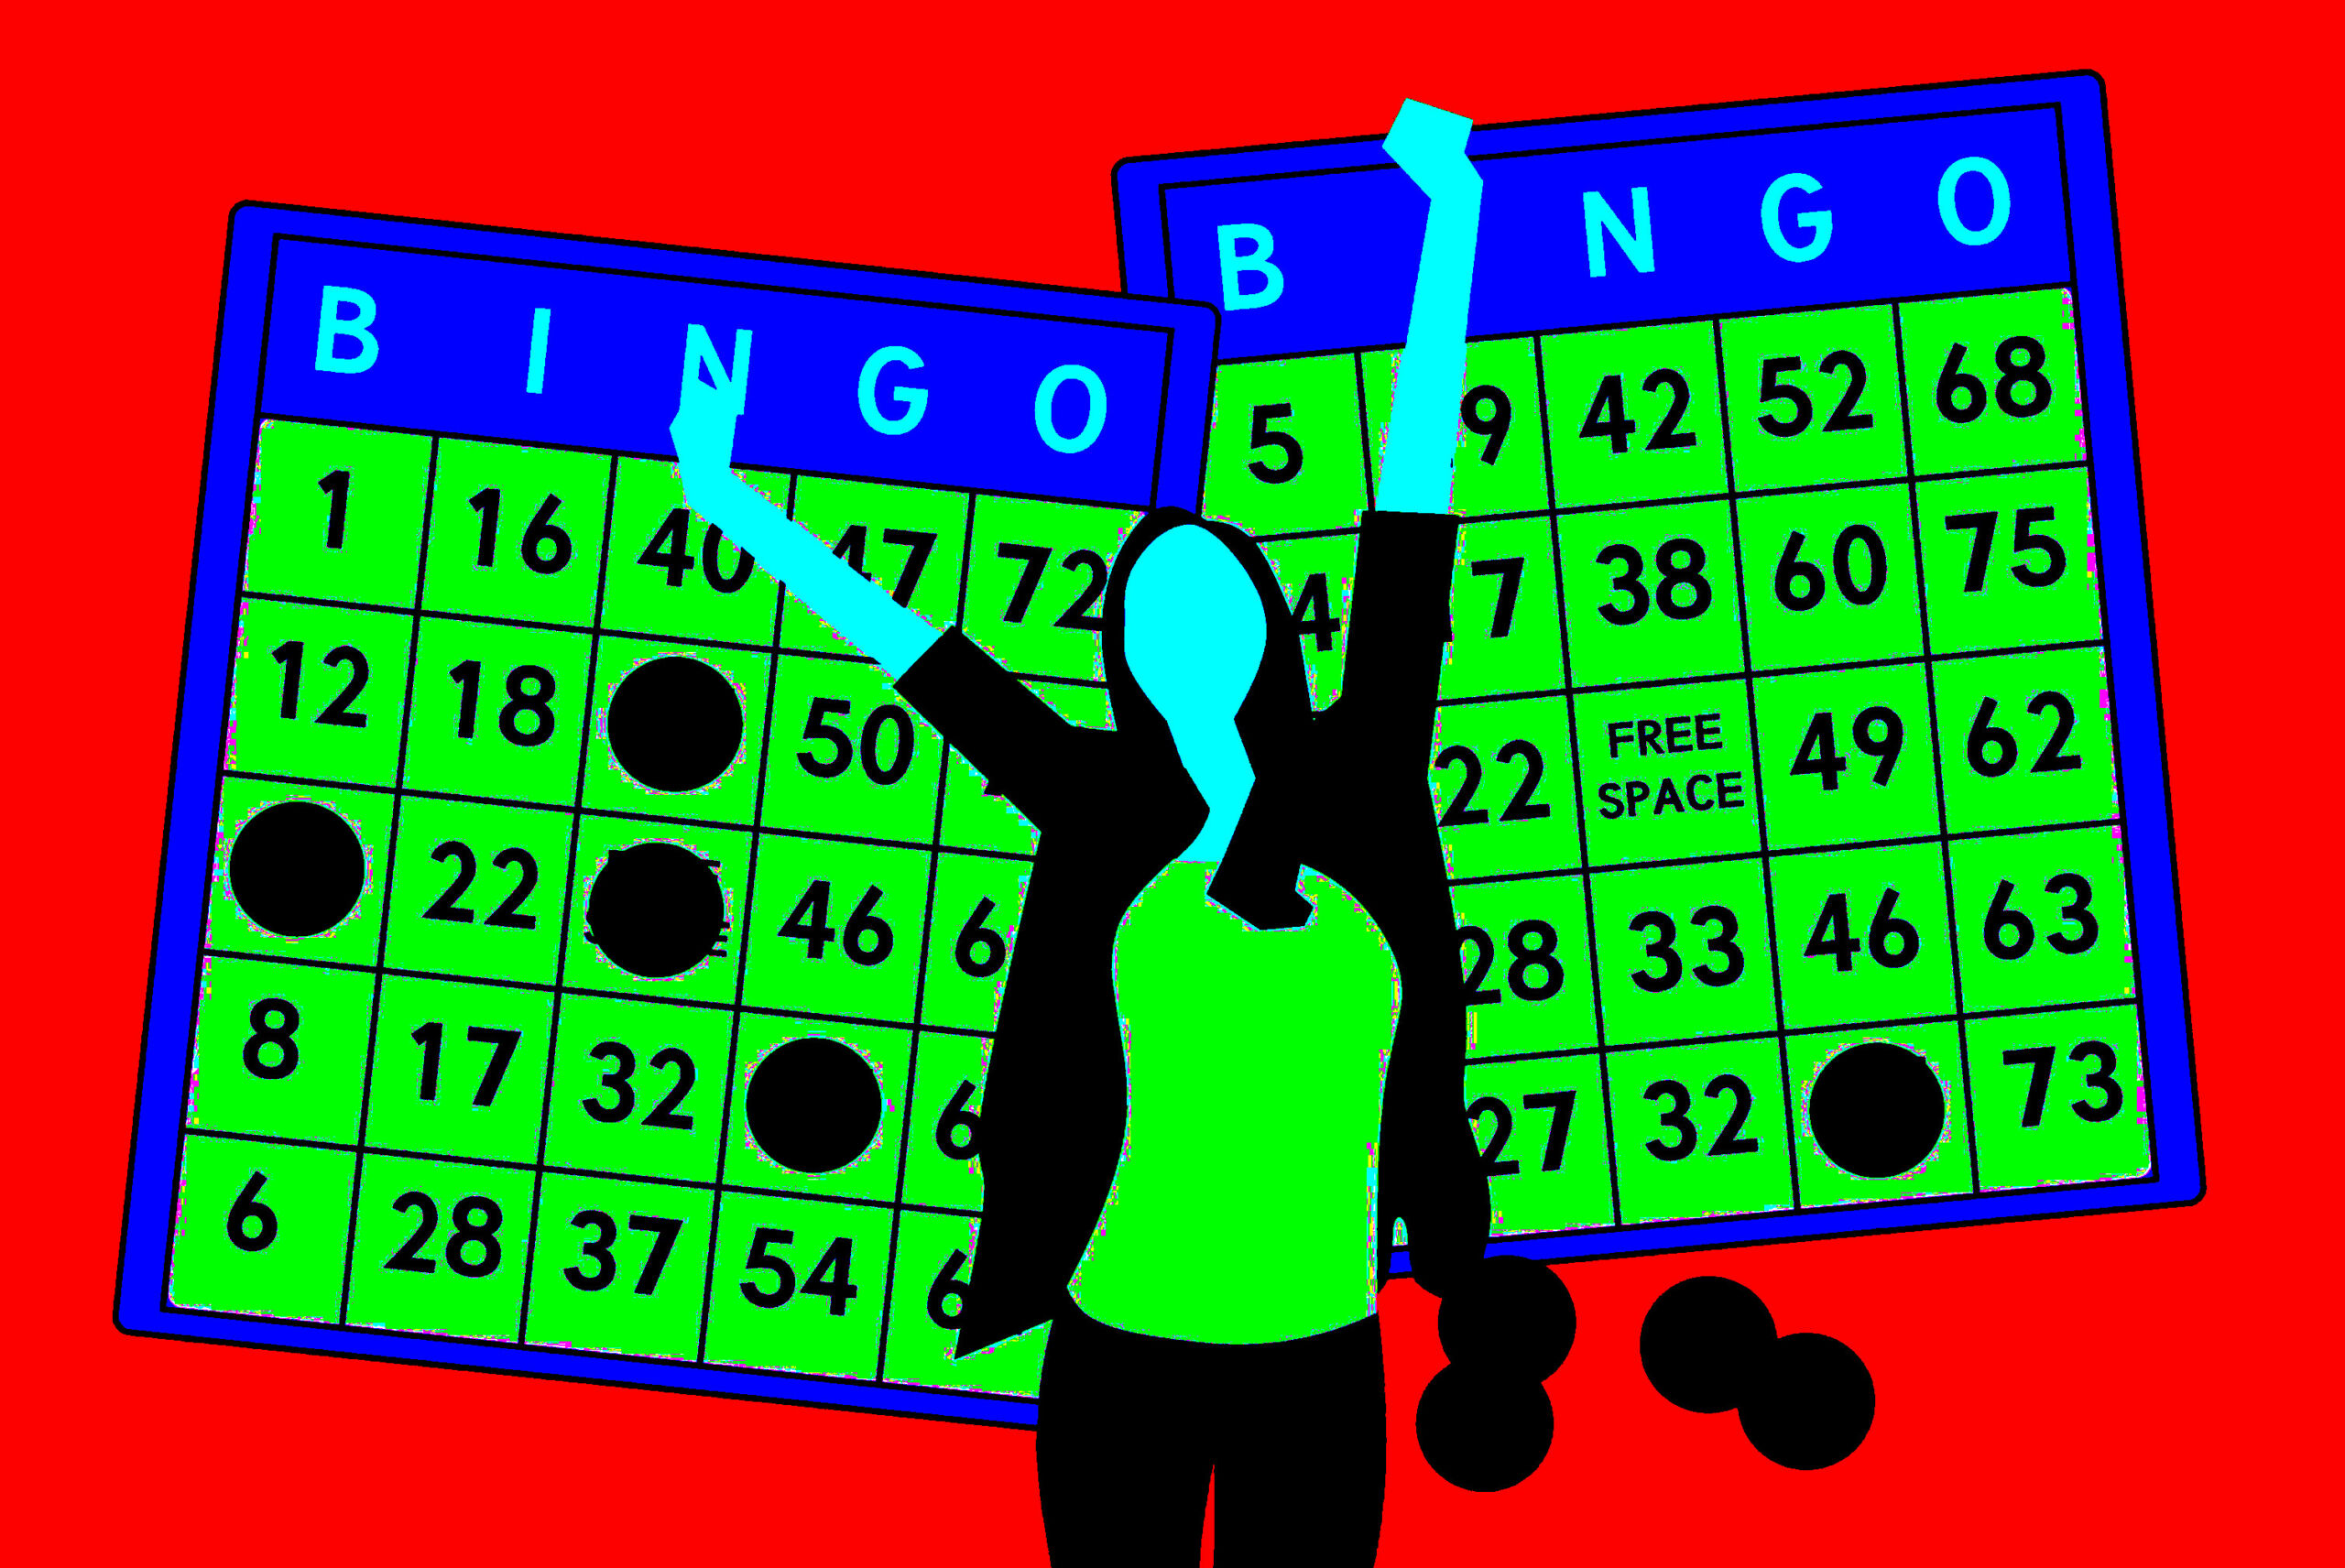 station casinos big bingo weekend 2020